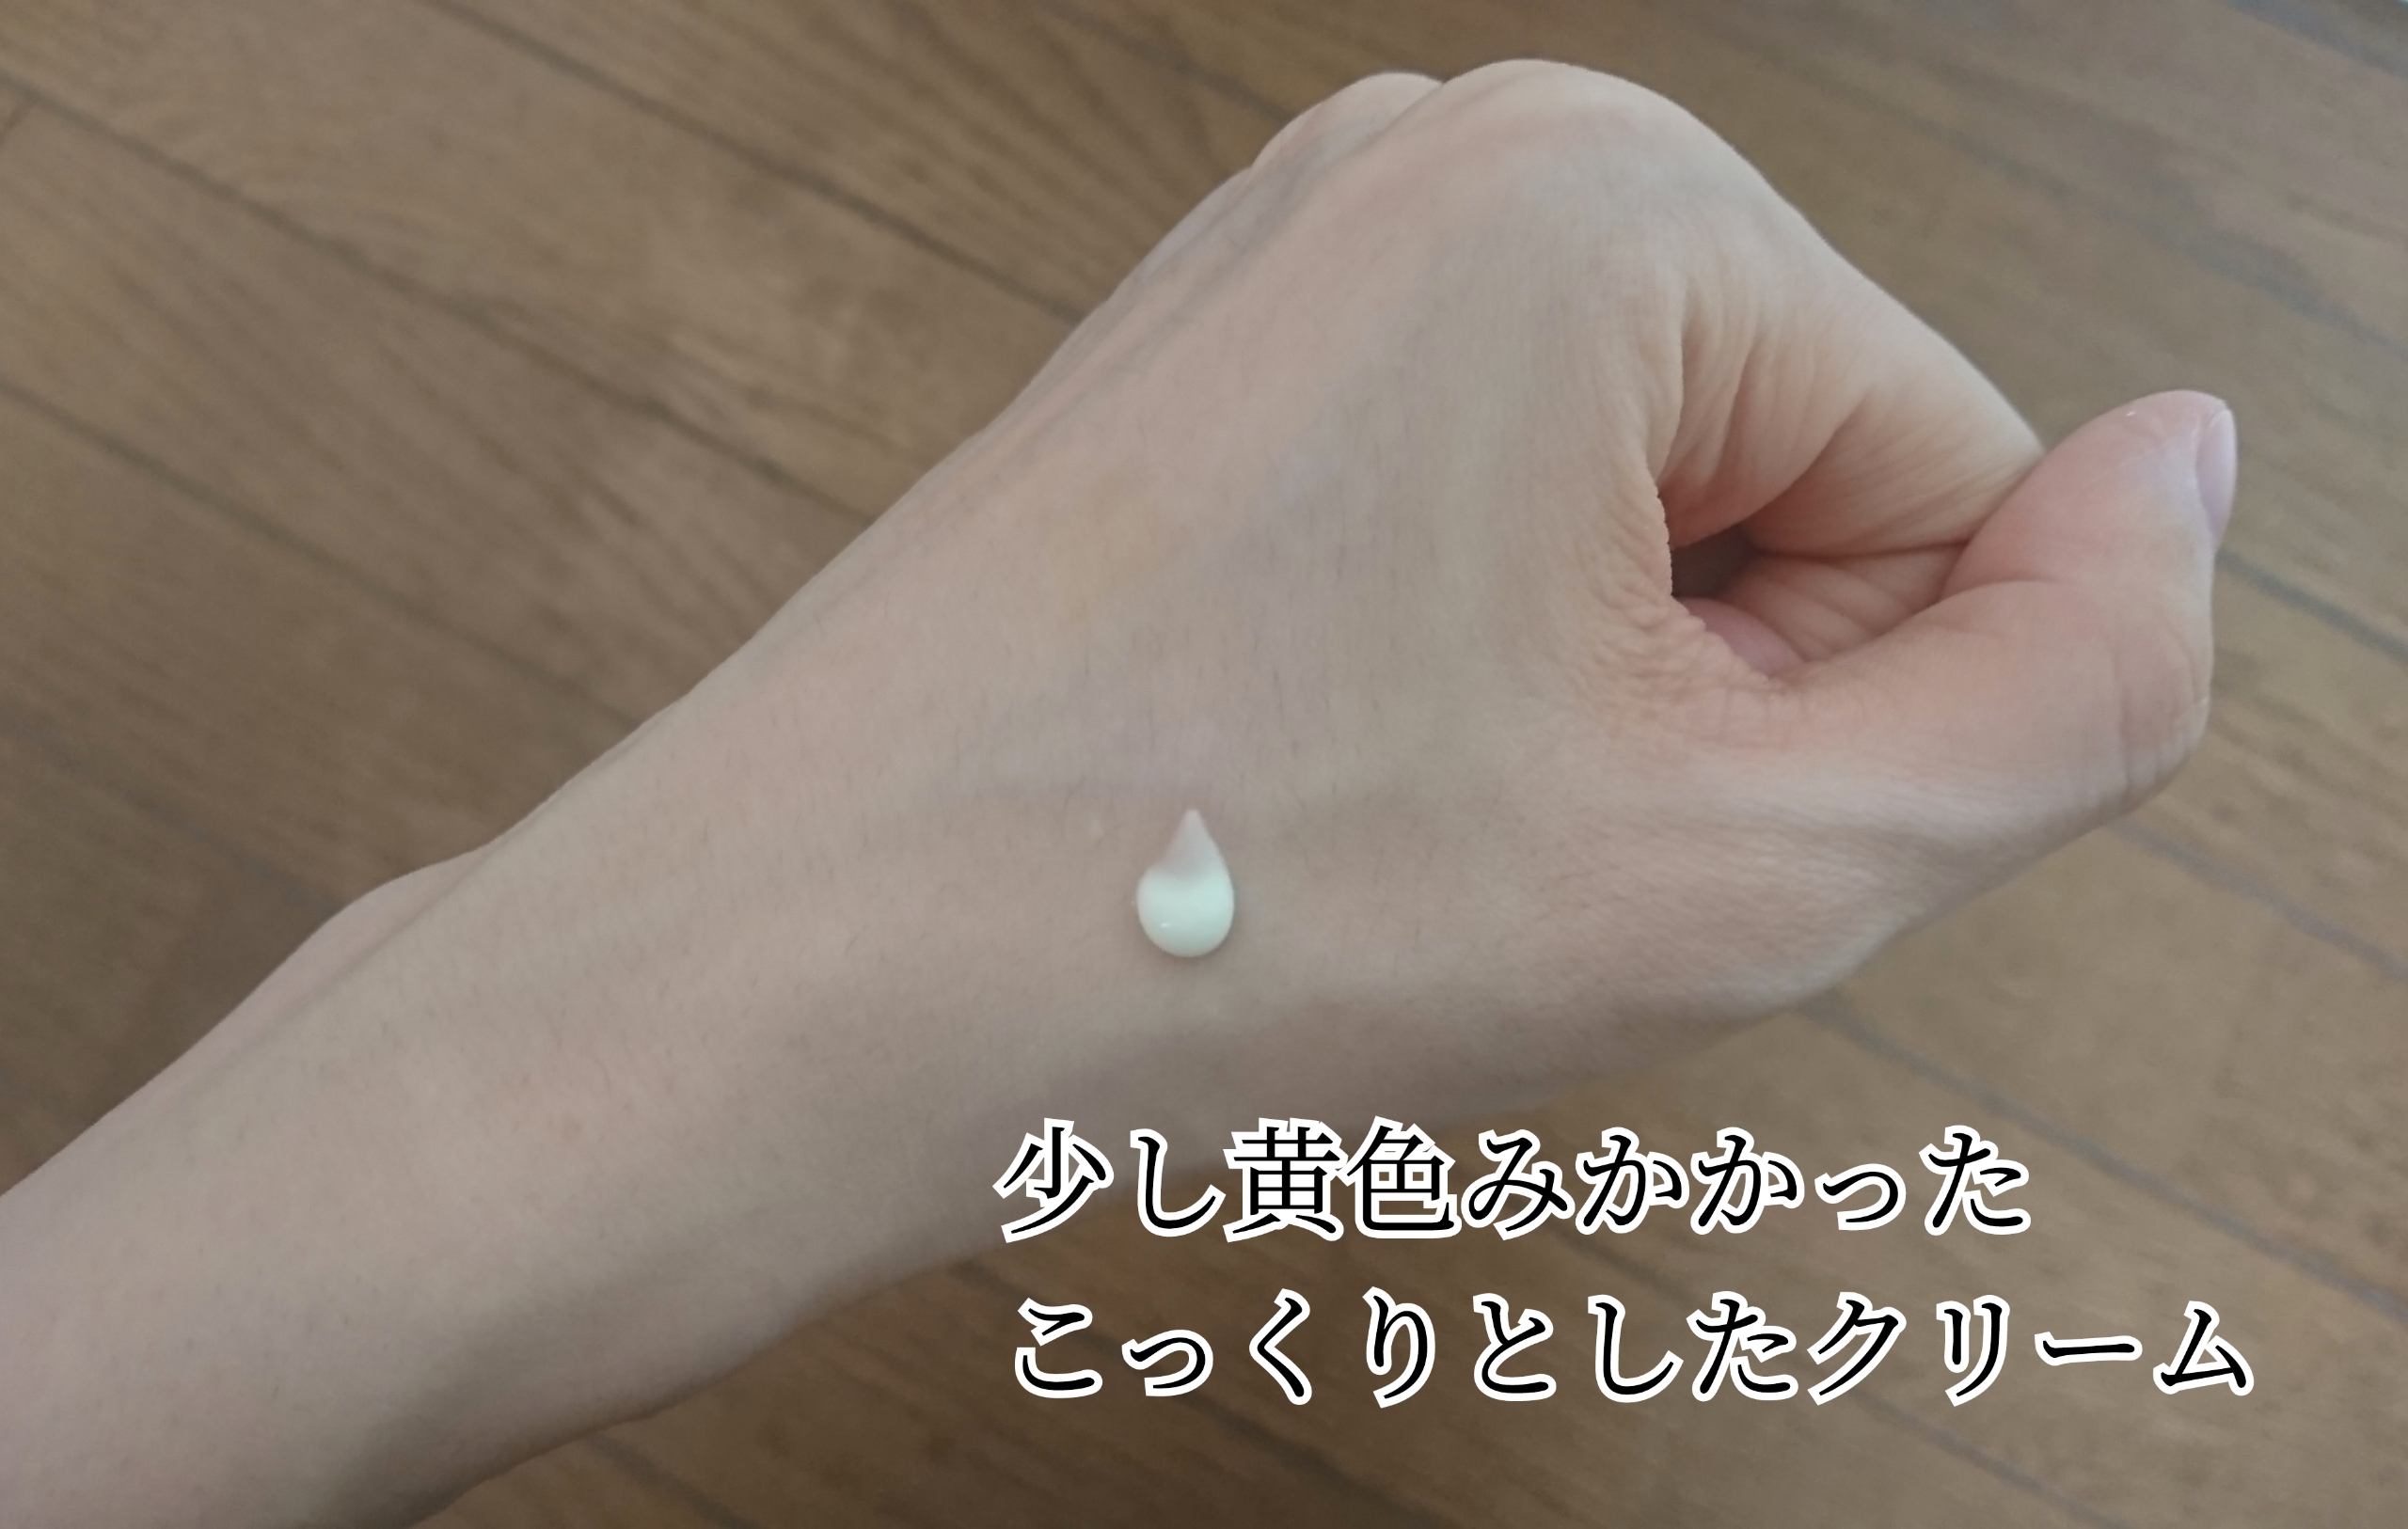 BORDER FREE cormetics マルチフェイシャルクリームを使ったYuKaRi♡さんのクチコミ画像4